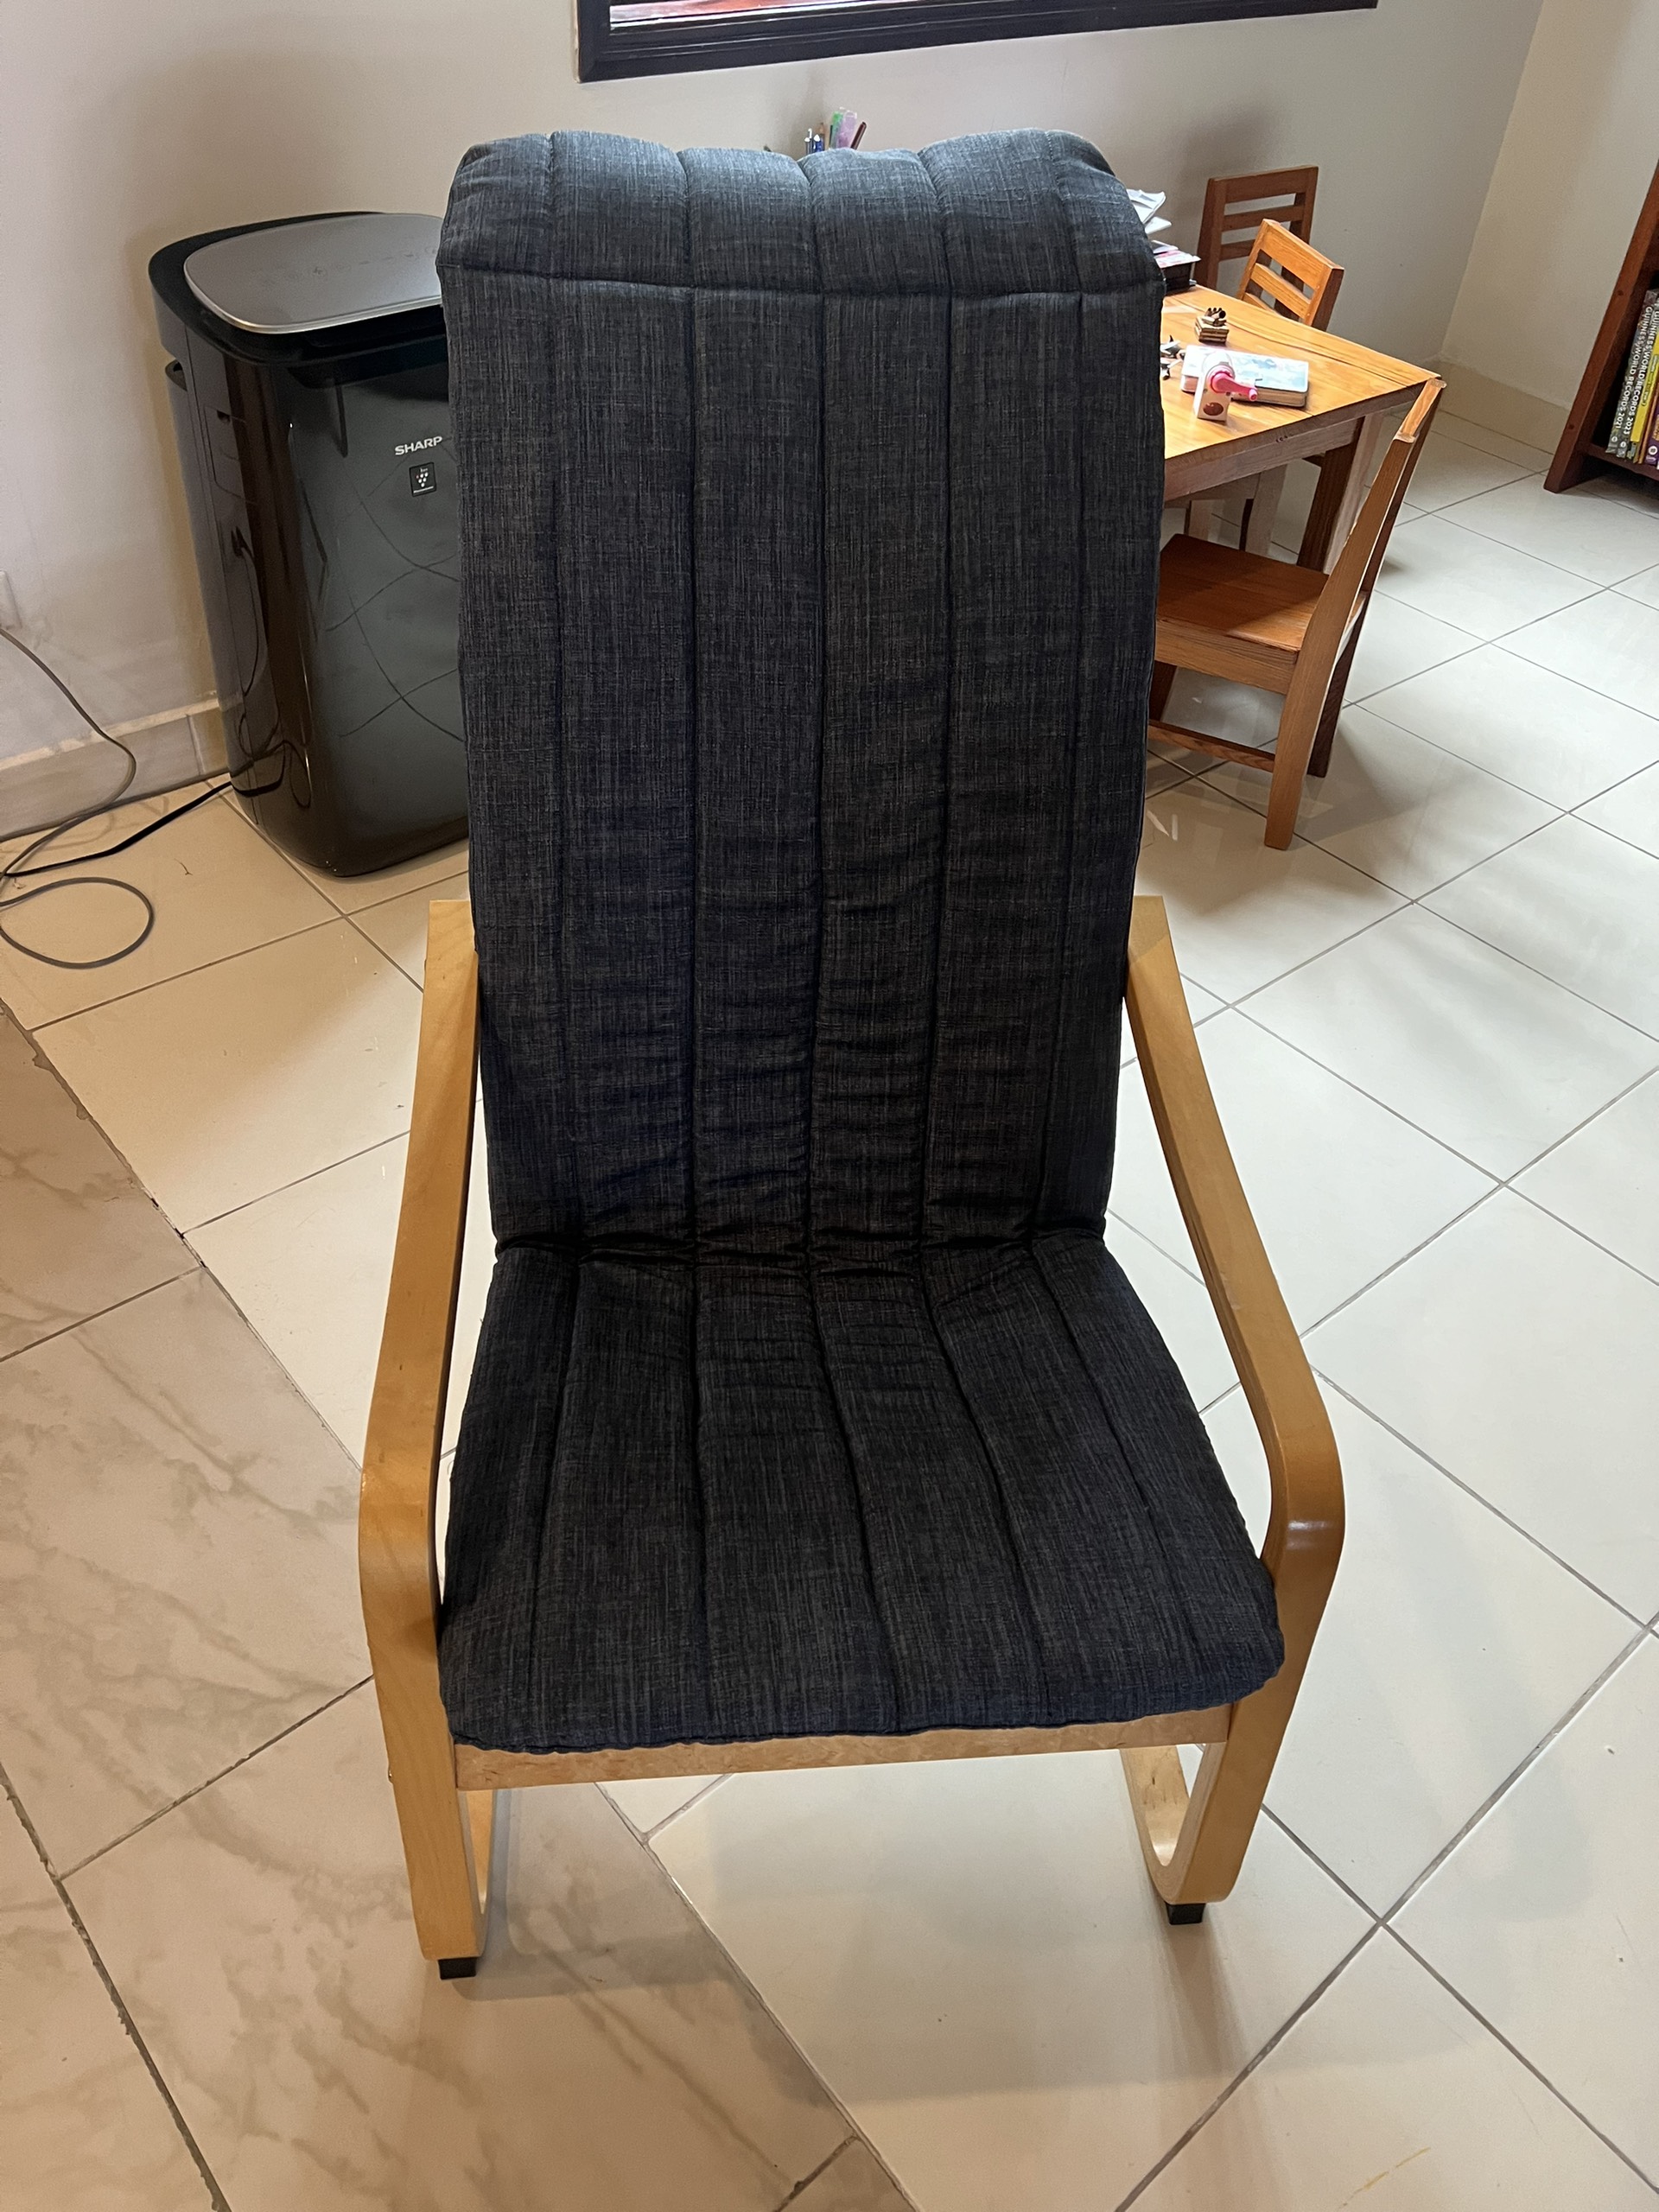 Customized rocking chair's cushion